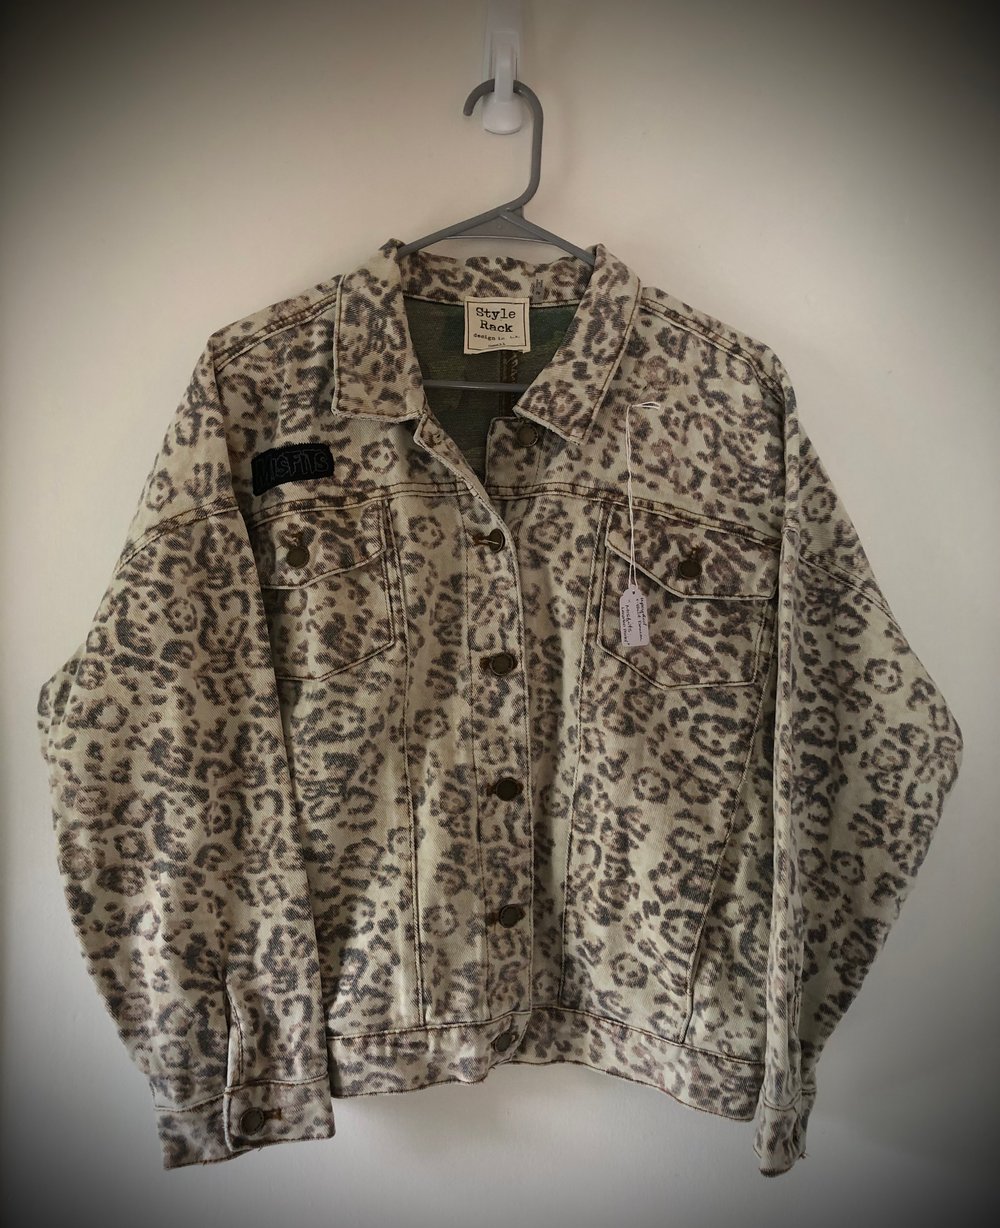 Upcycle “Misfits” cheetah print denim jacket